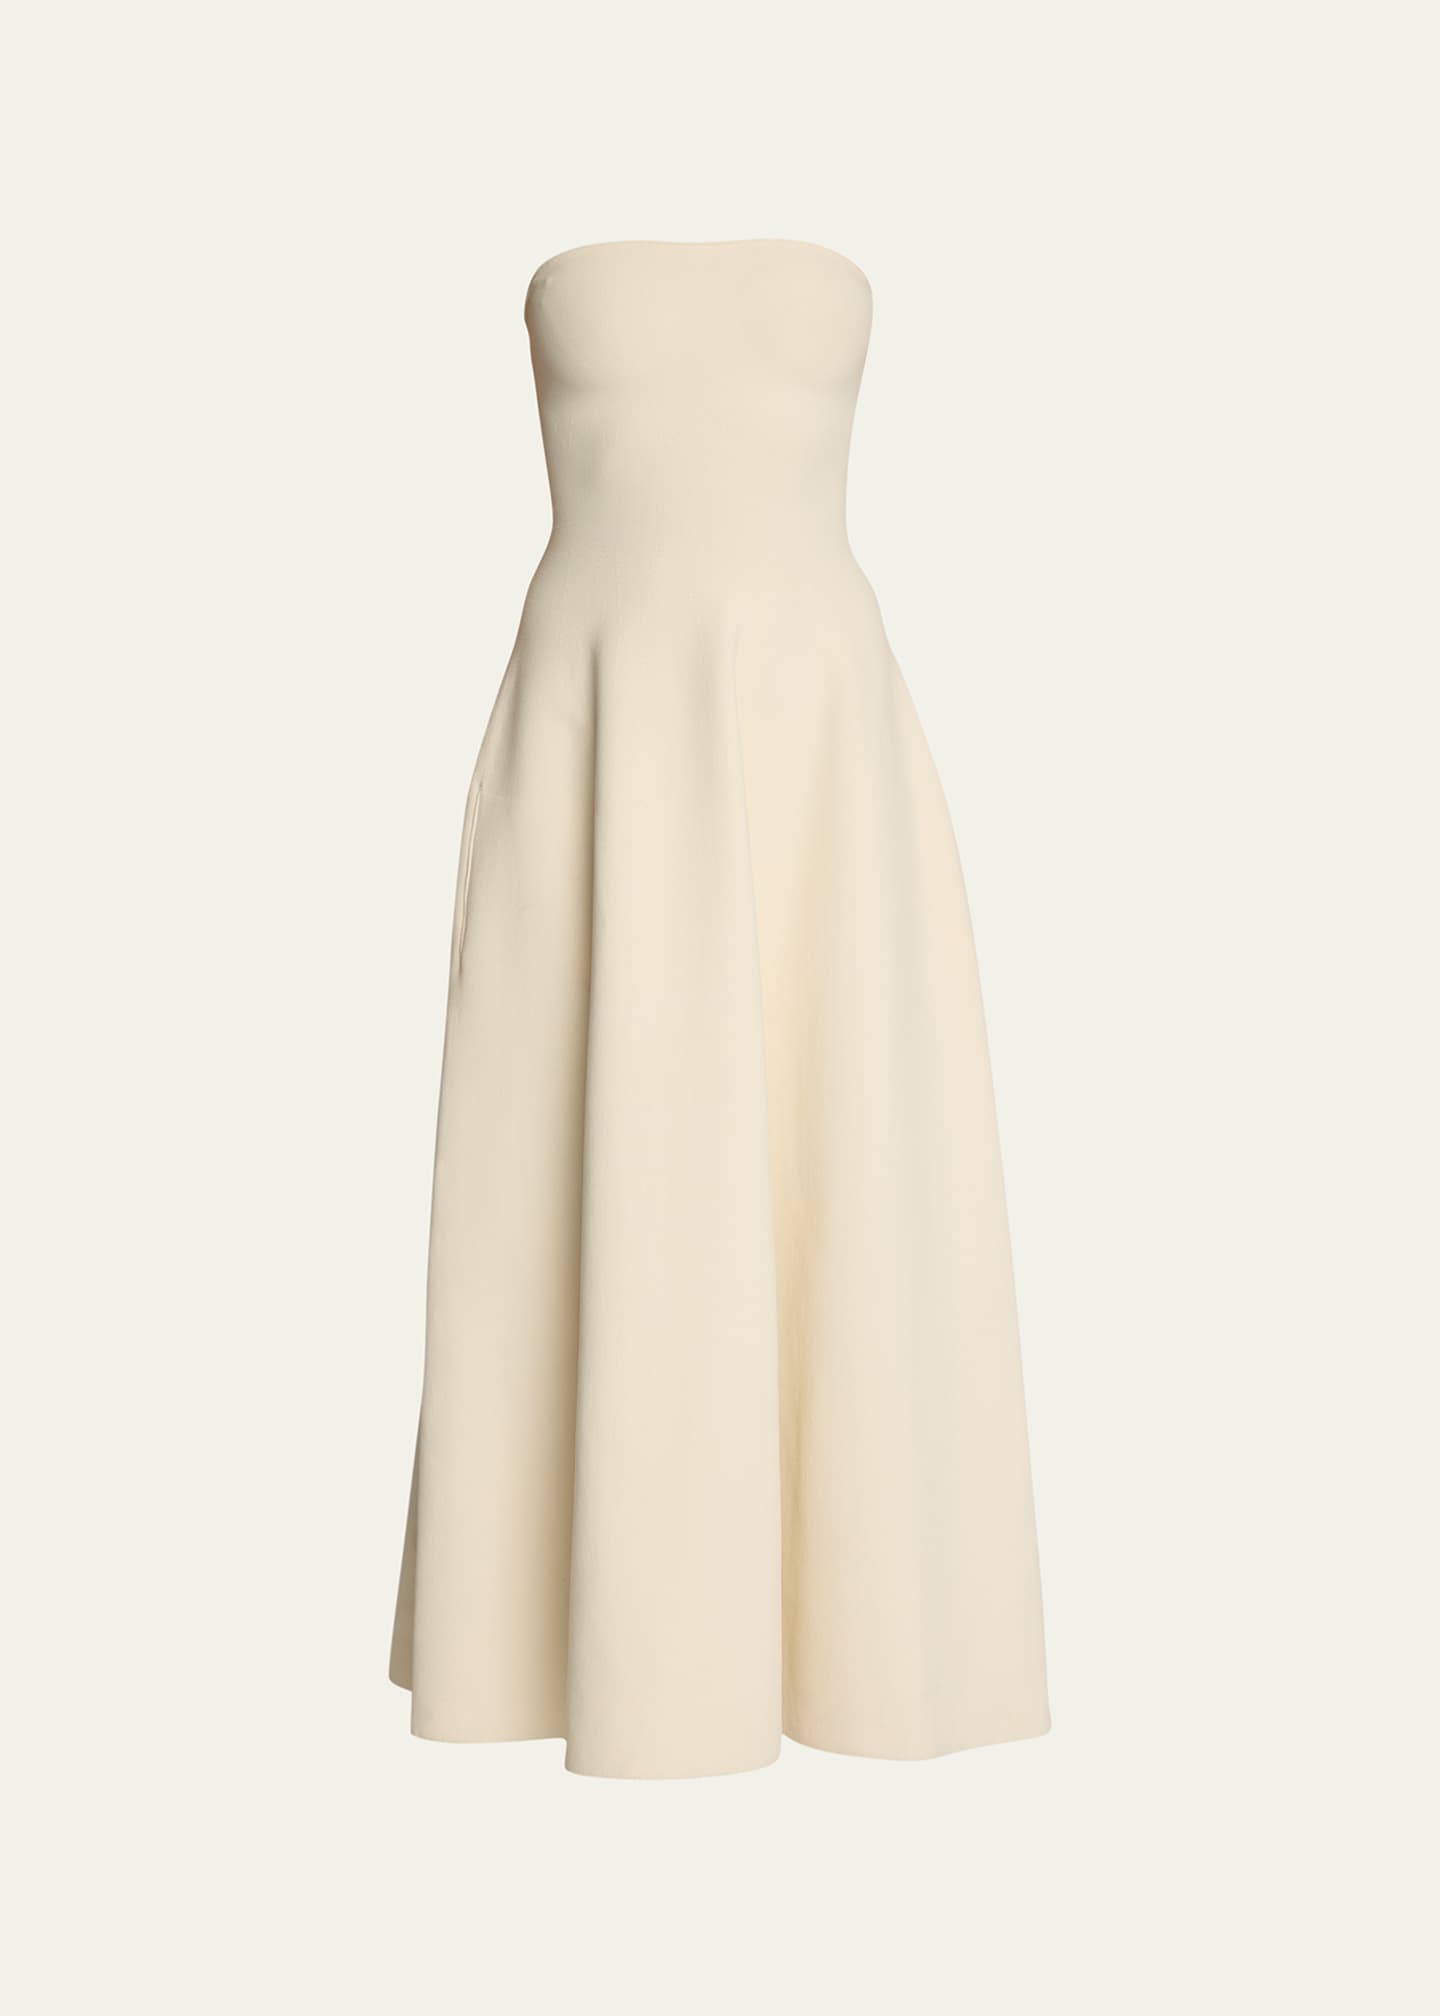 Brandon Maxwell Wool Crepe Midi Dress, $758